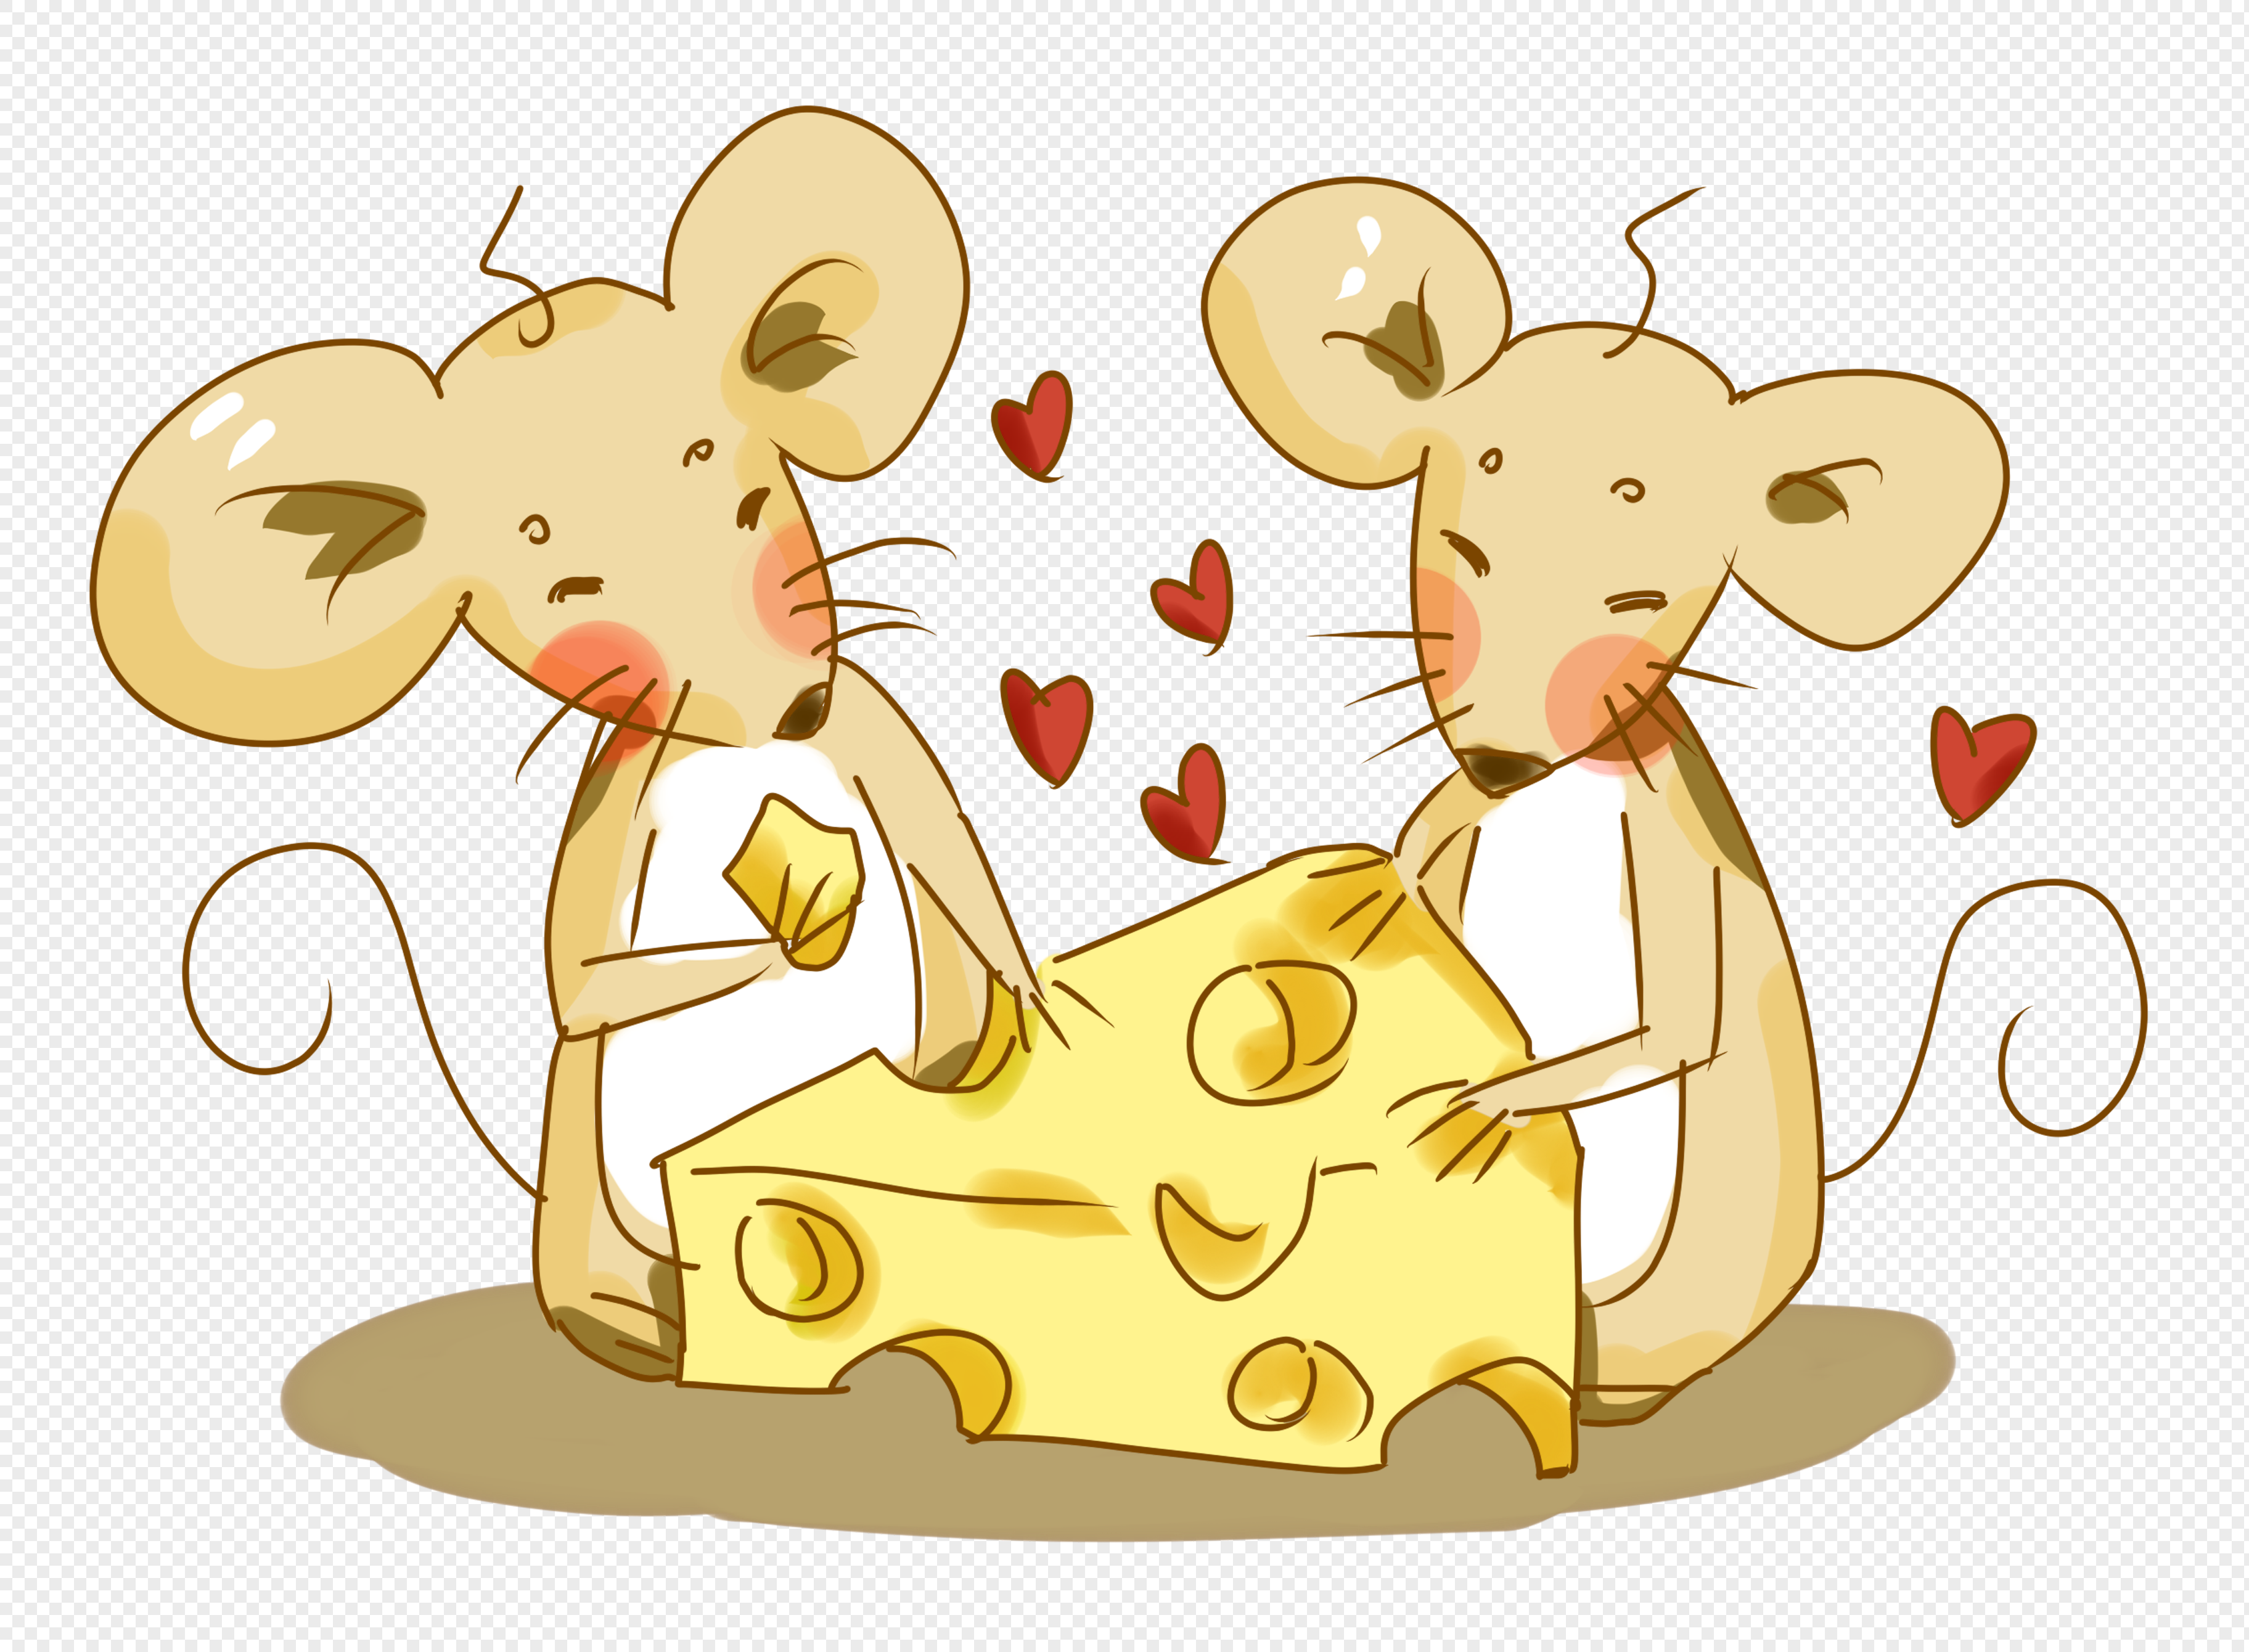 Мышонок крадет сыр